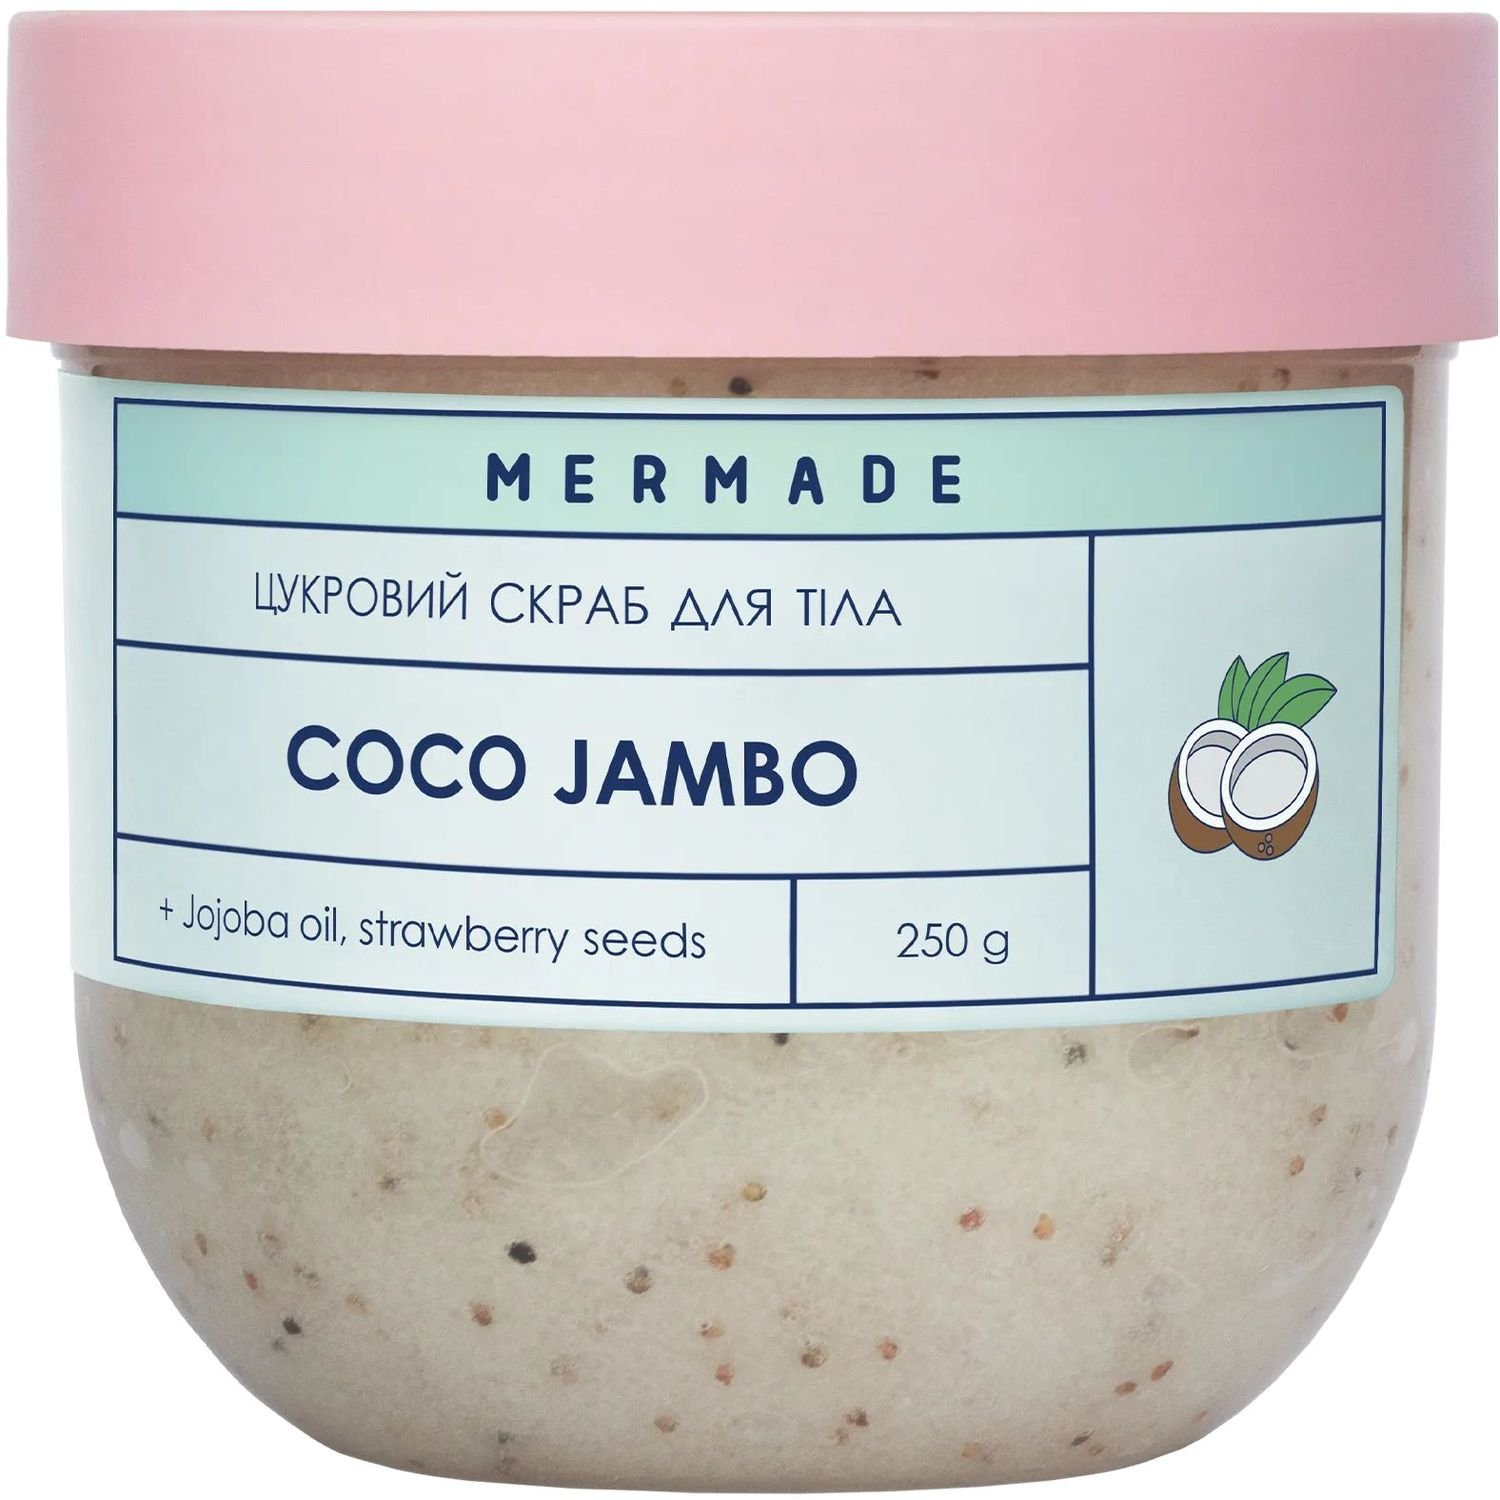 Цукровий скраб для тіла Mermade Coco Jambo 250 г - фото 1